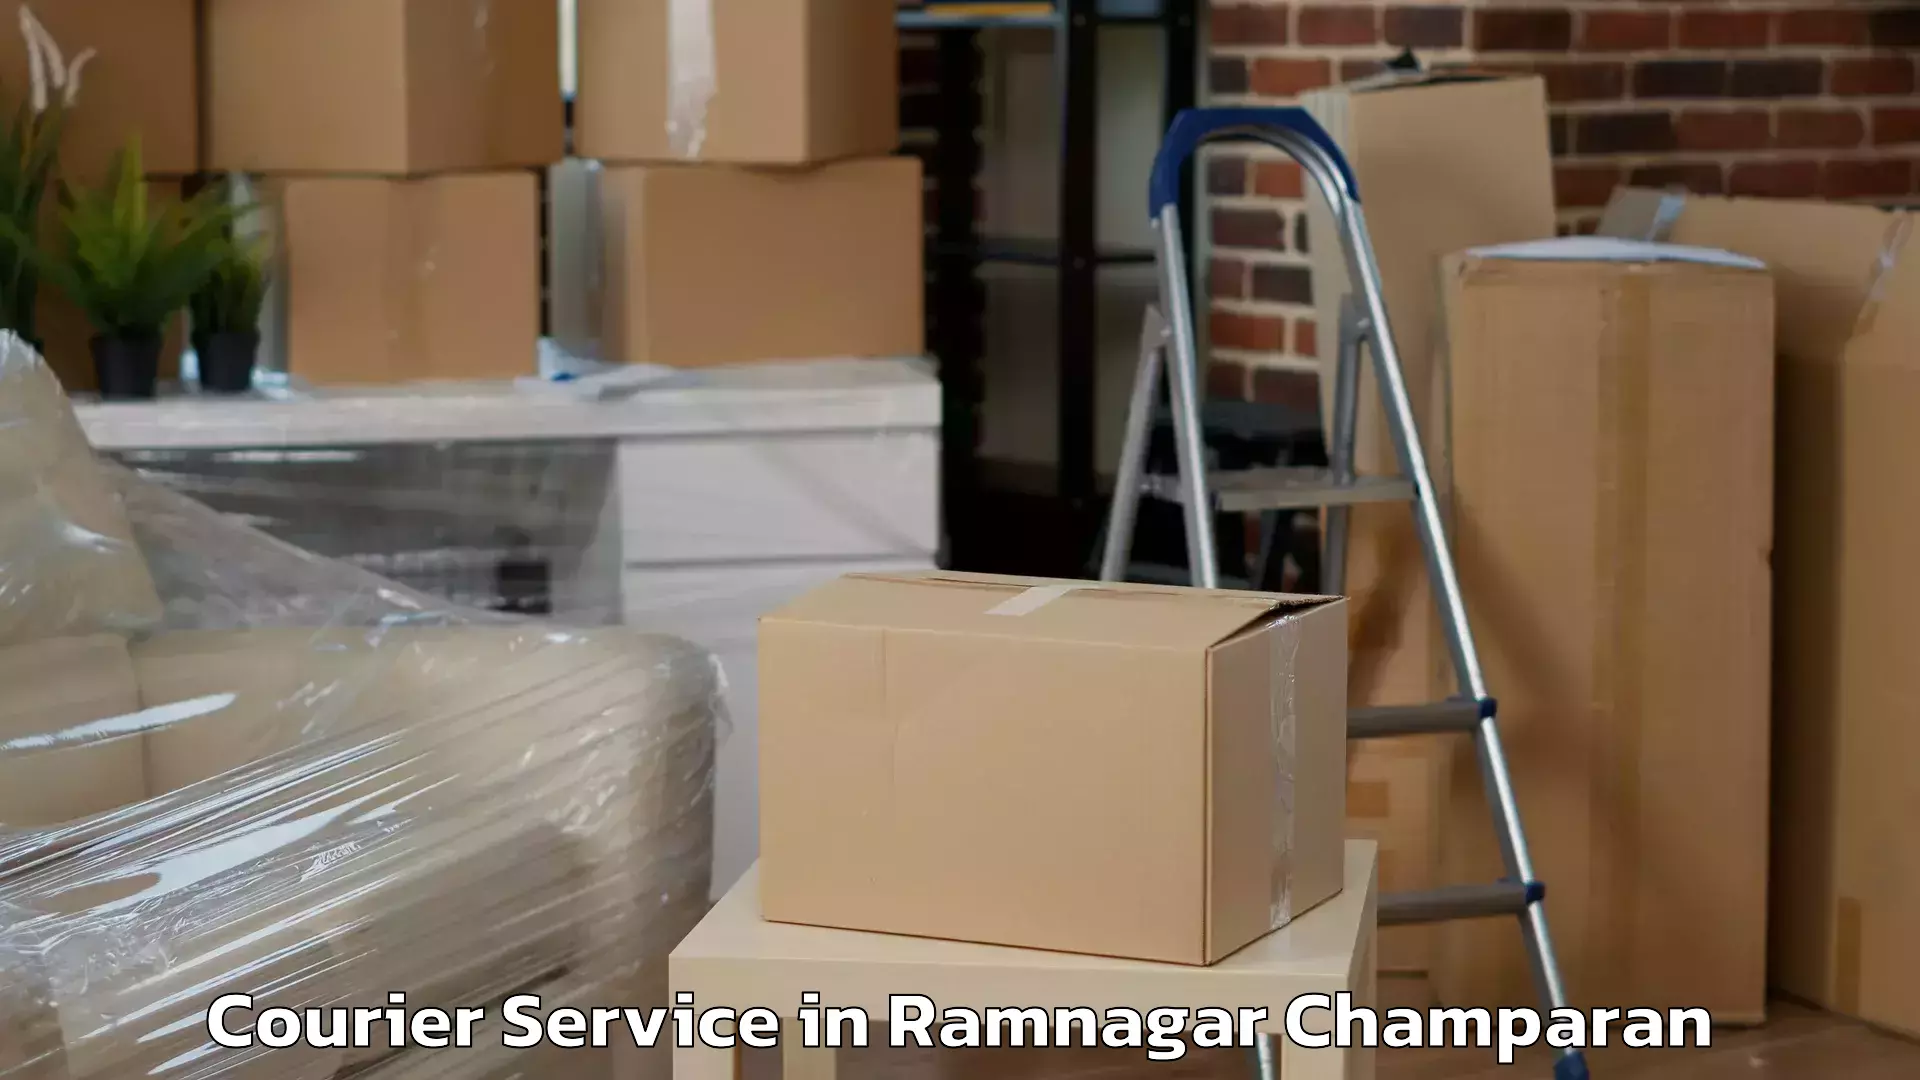 E-commerce fulfillment in Ramnagar Champaran